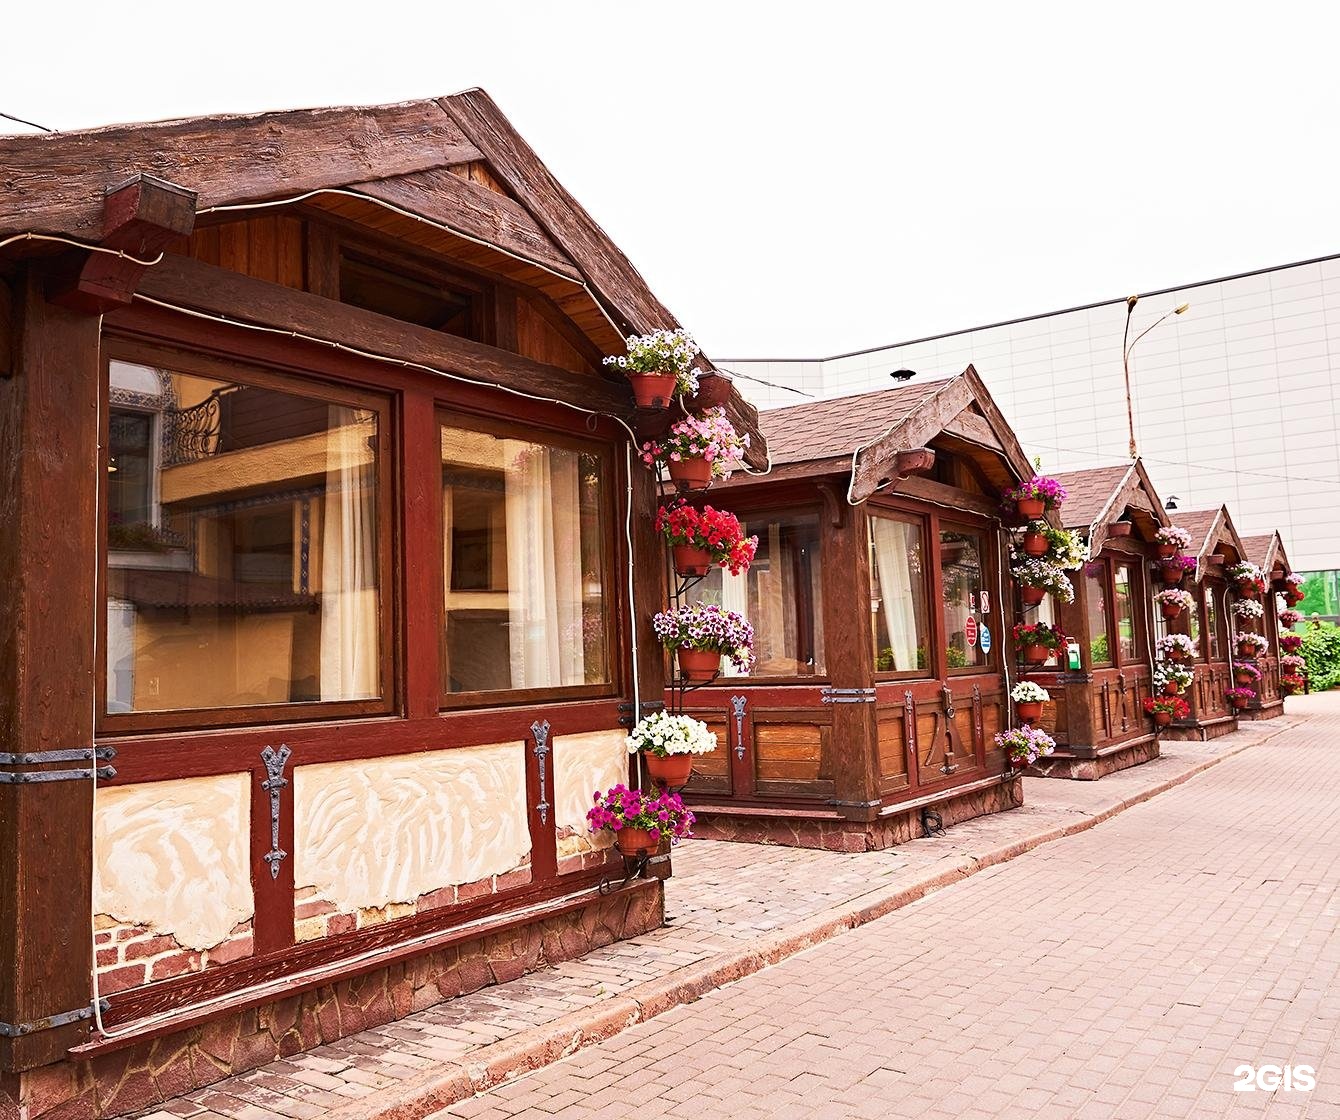 бакинский бульвар ресторан москва